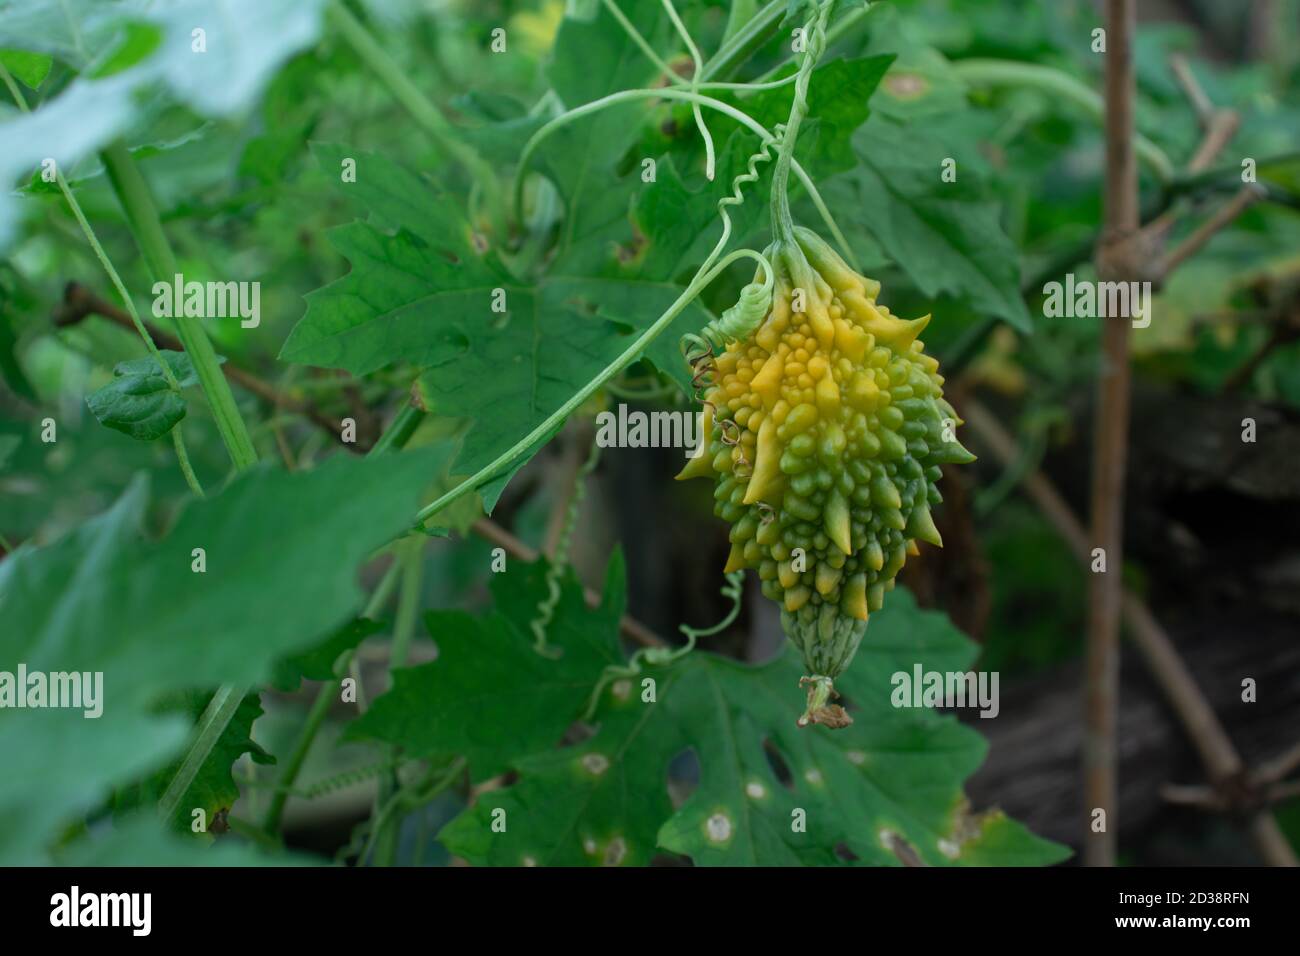 Balsambirne oder Alligatorbirne oder Momordica charantia aus der Familie der Cucurbitaceae Stockfoto